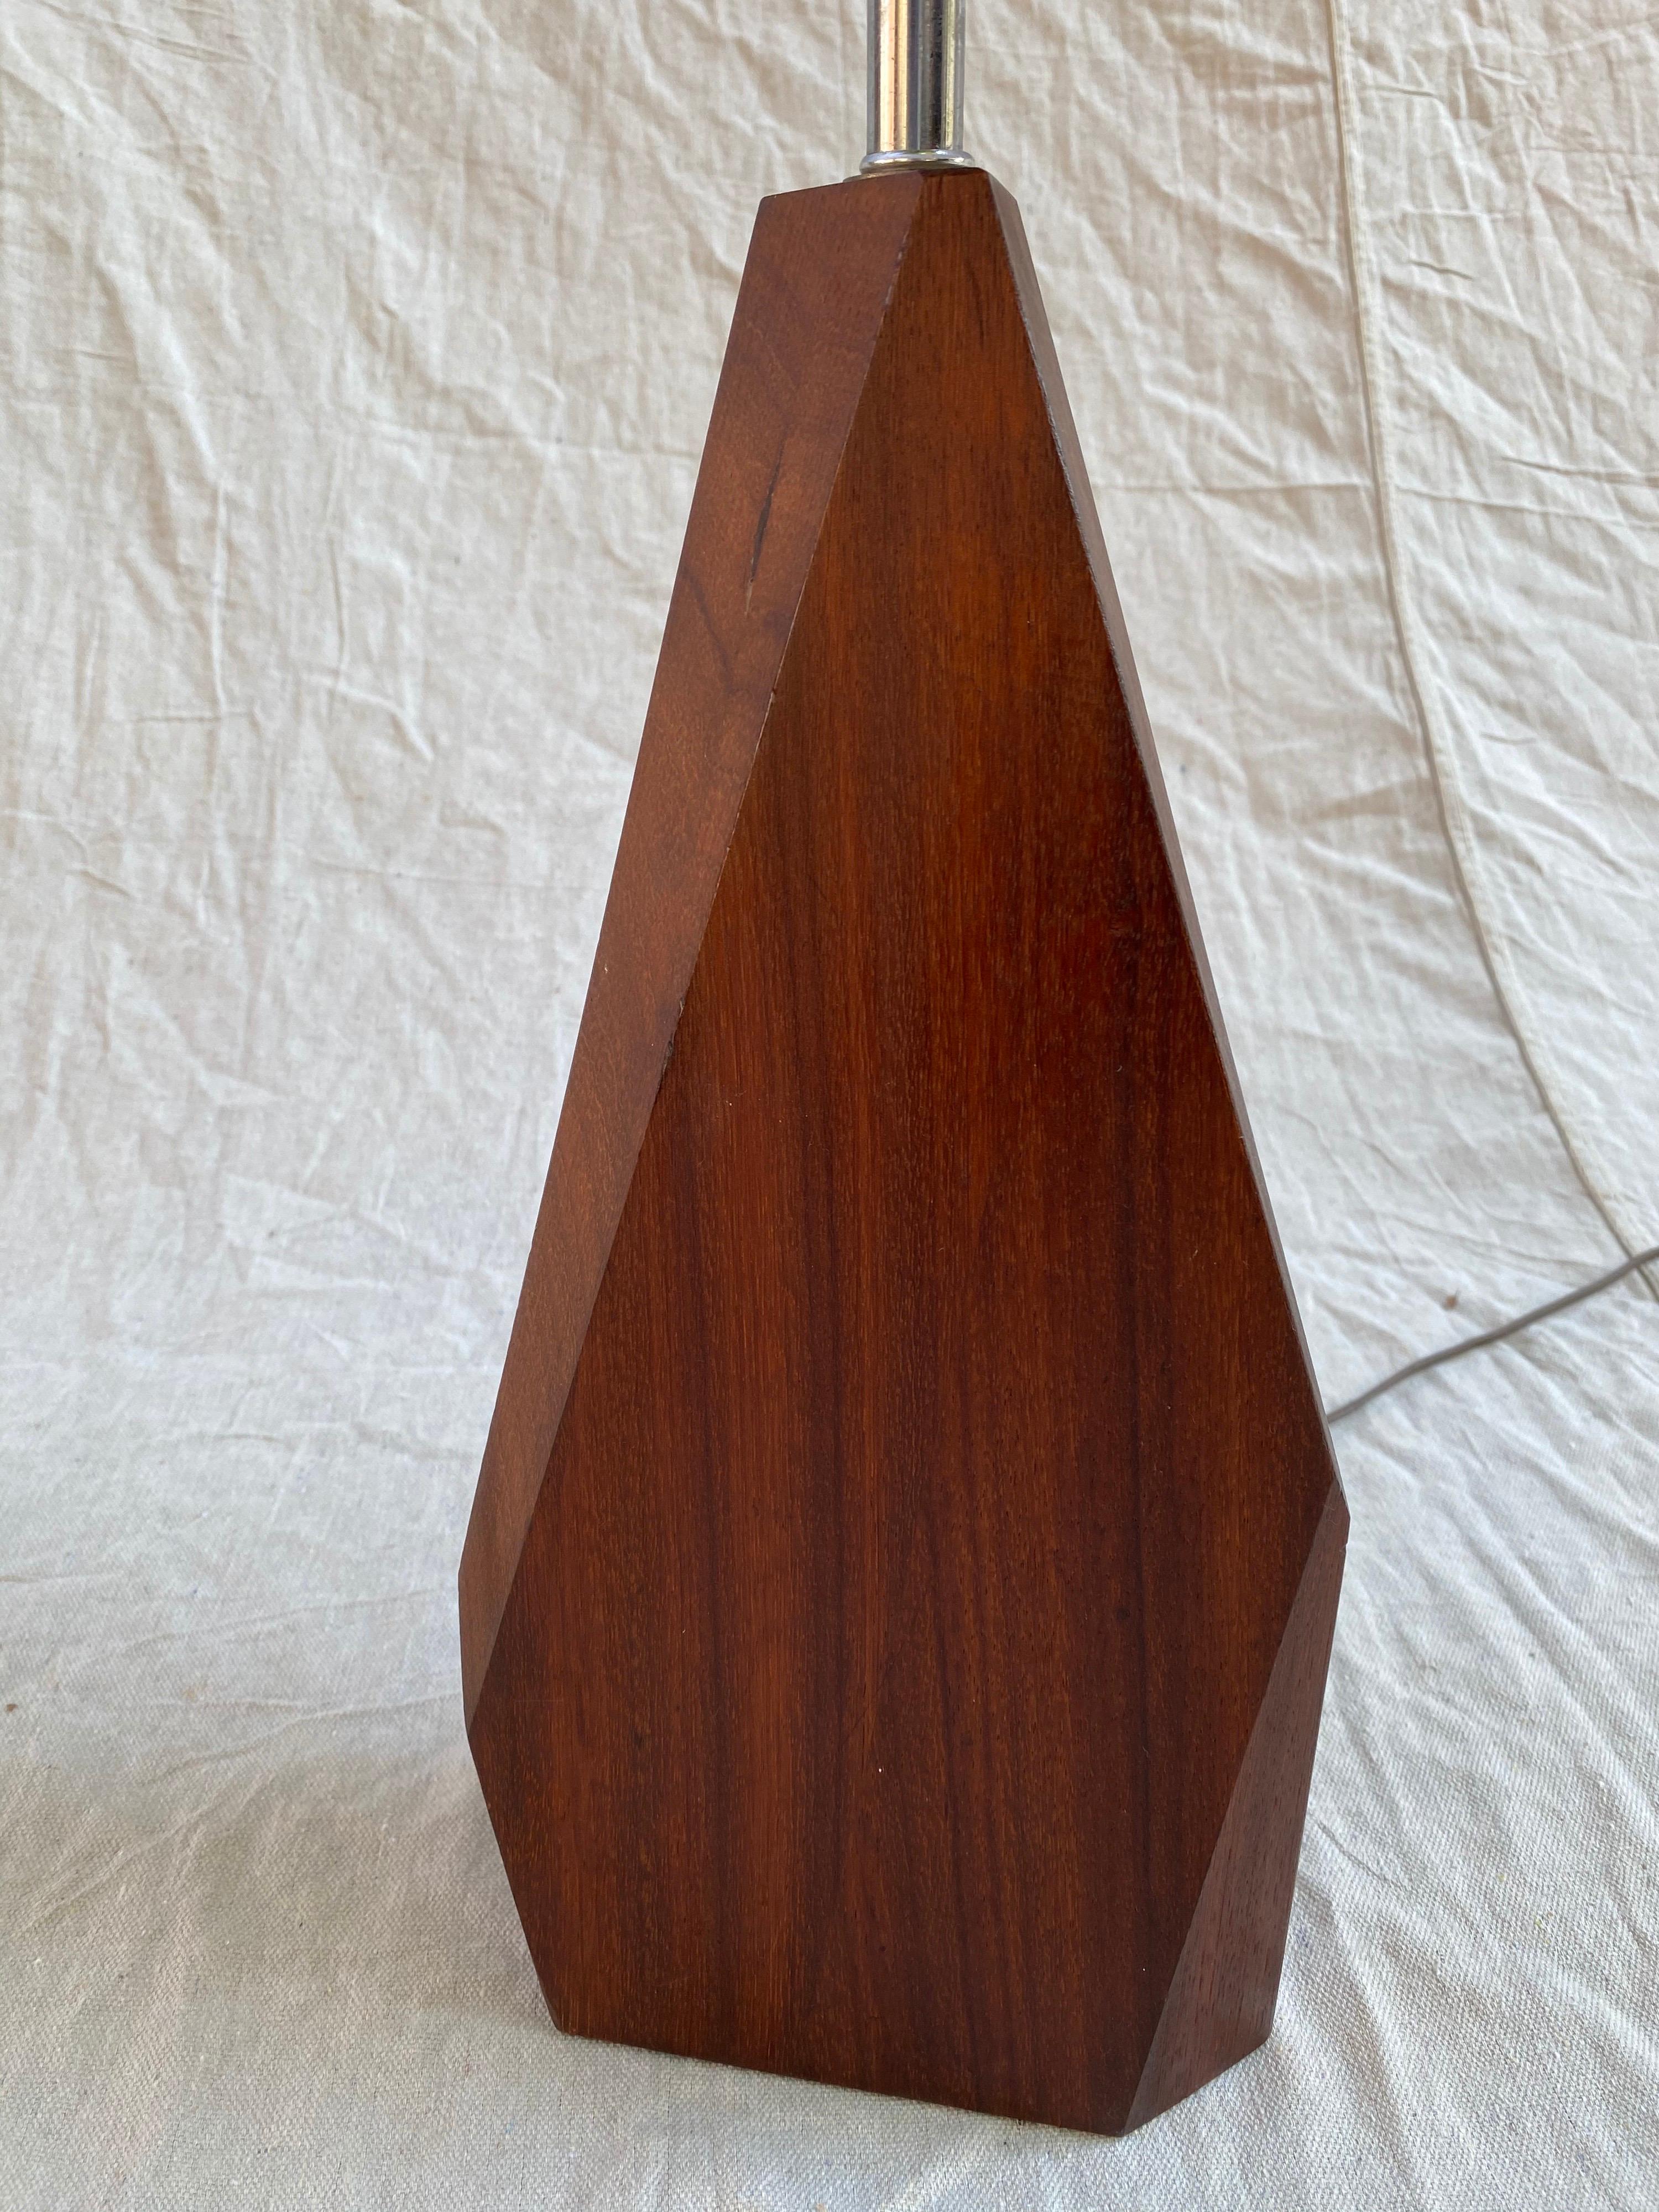 geometric wood table lamp